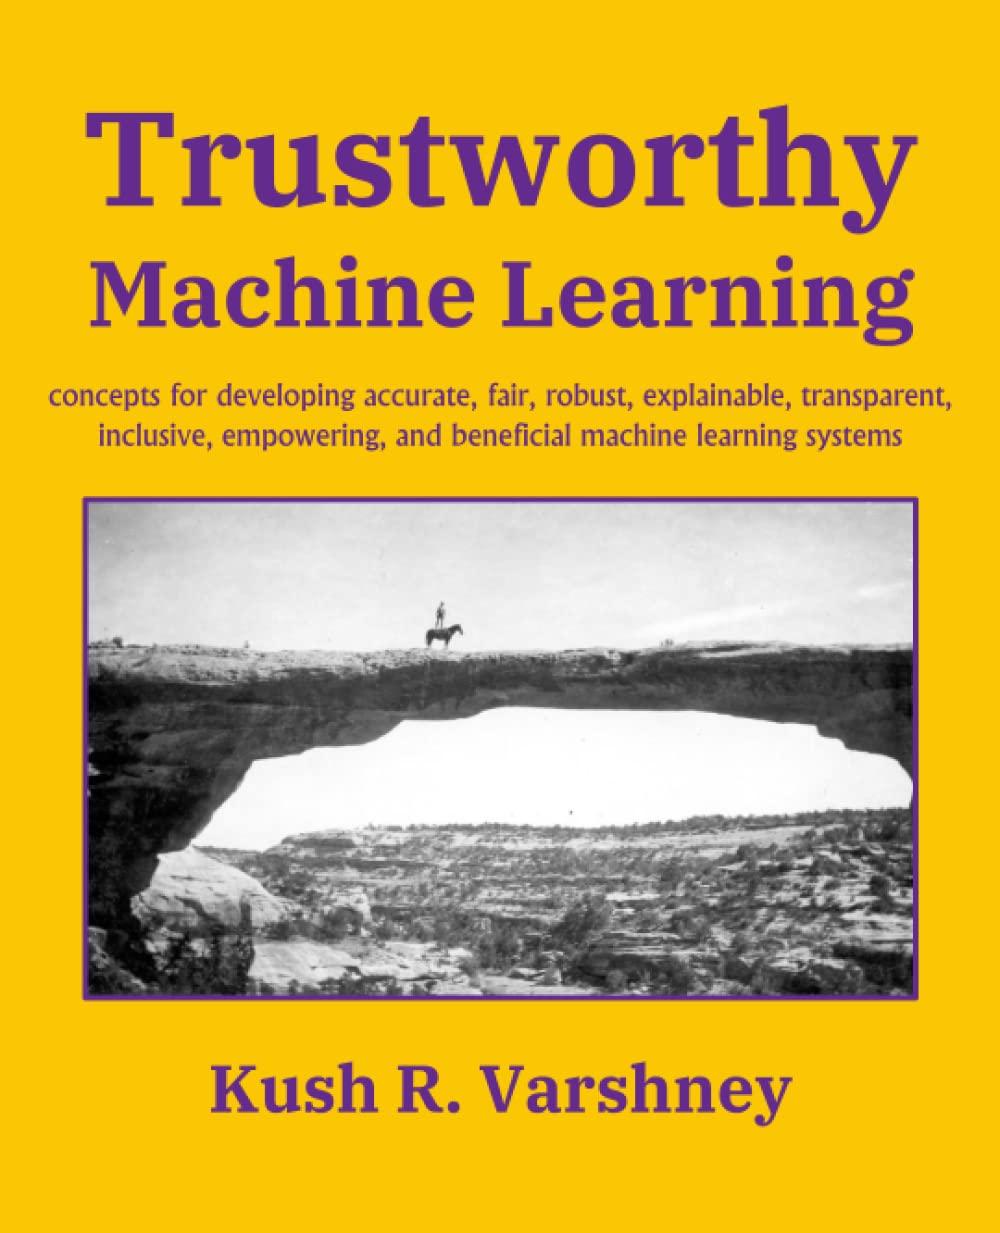 trustworthy machine learning 1st edition kush r. varshney b09sl5gpcd, 979-8411903959